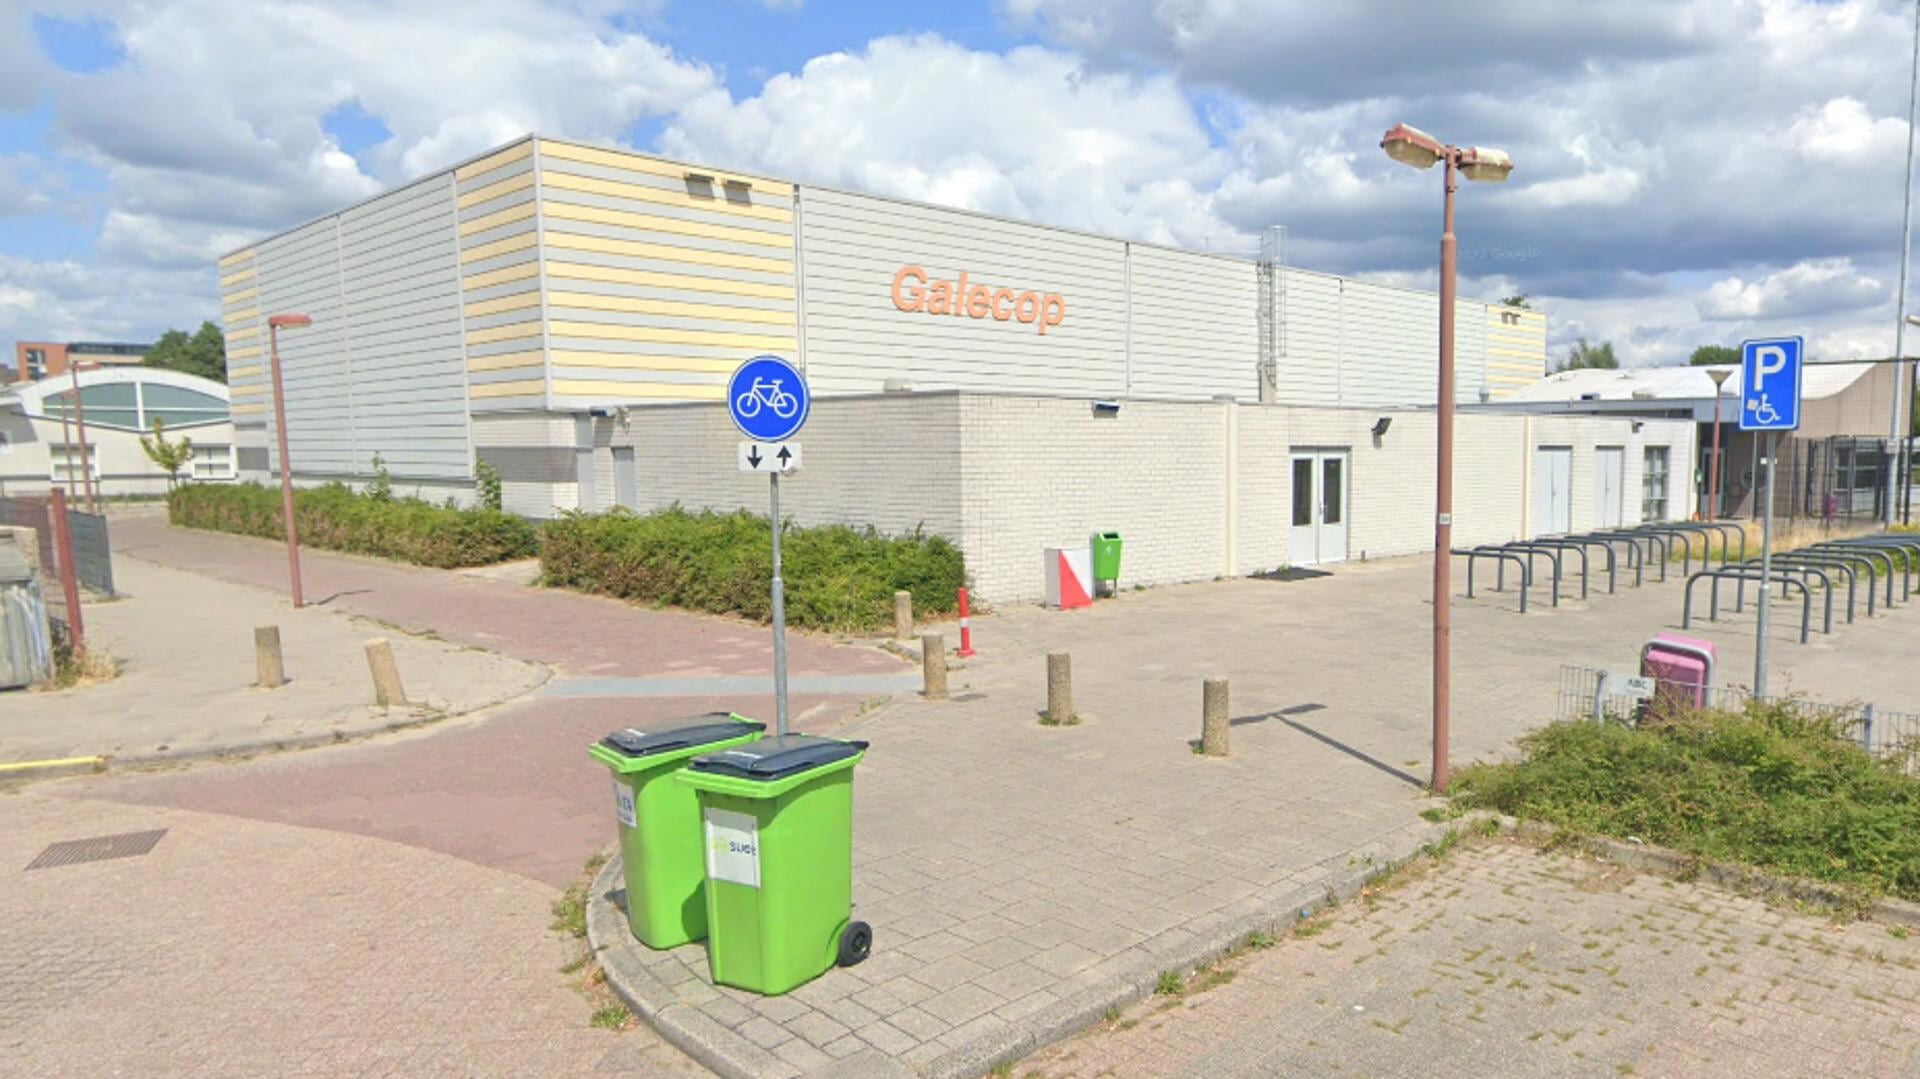 • Sporthal Galecop in Nieuwegein.